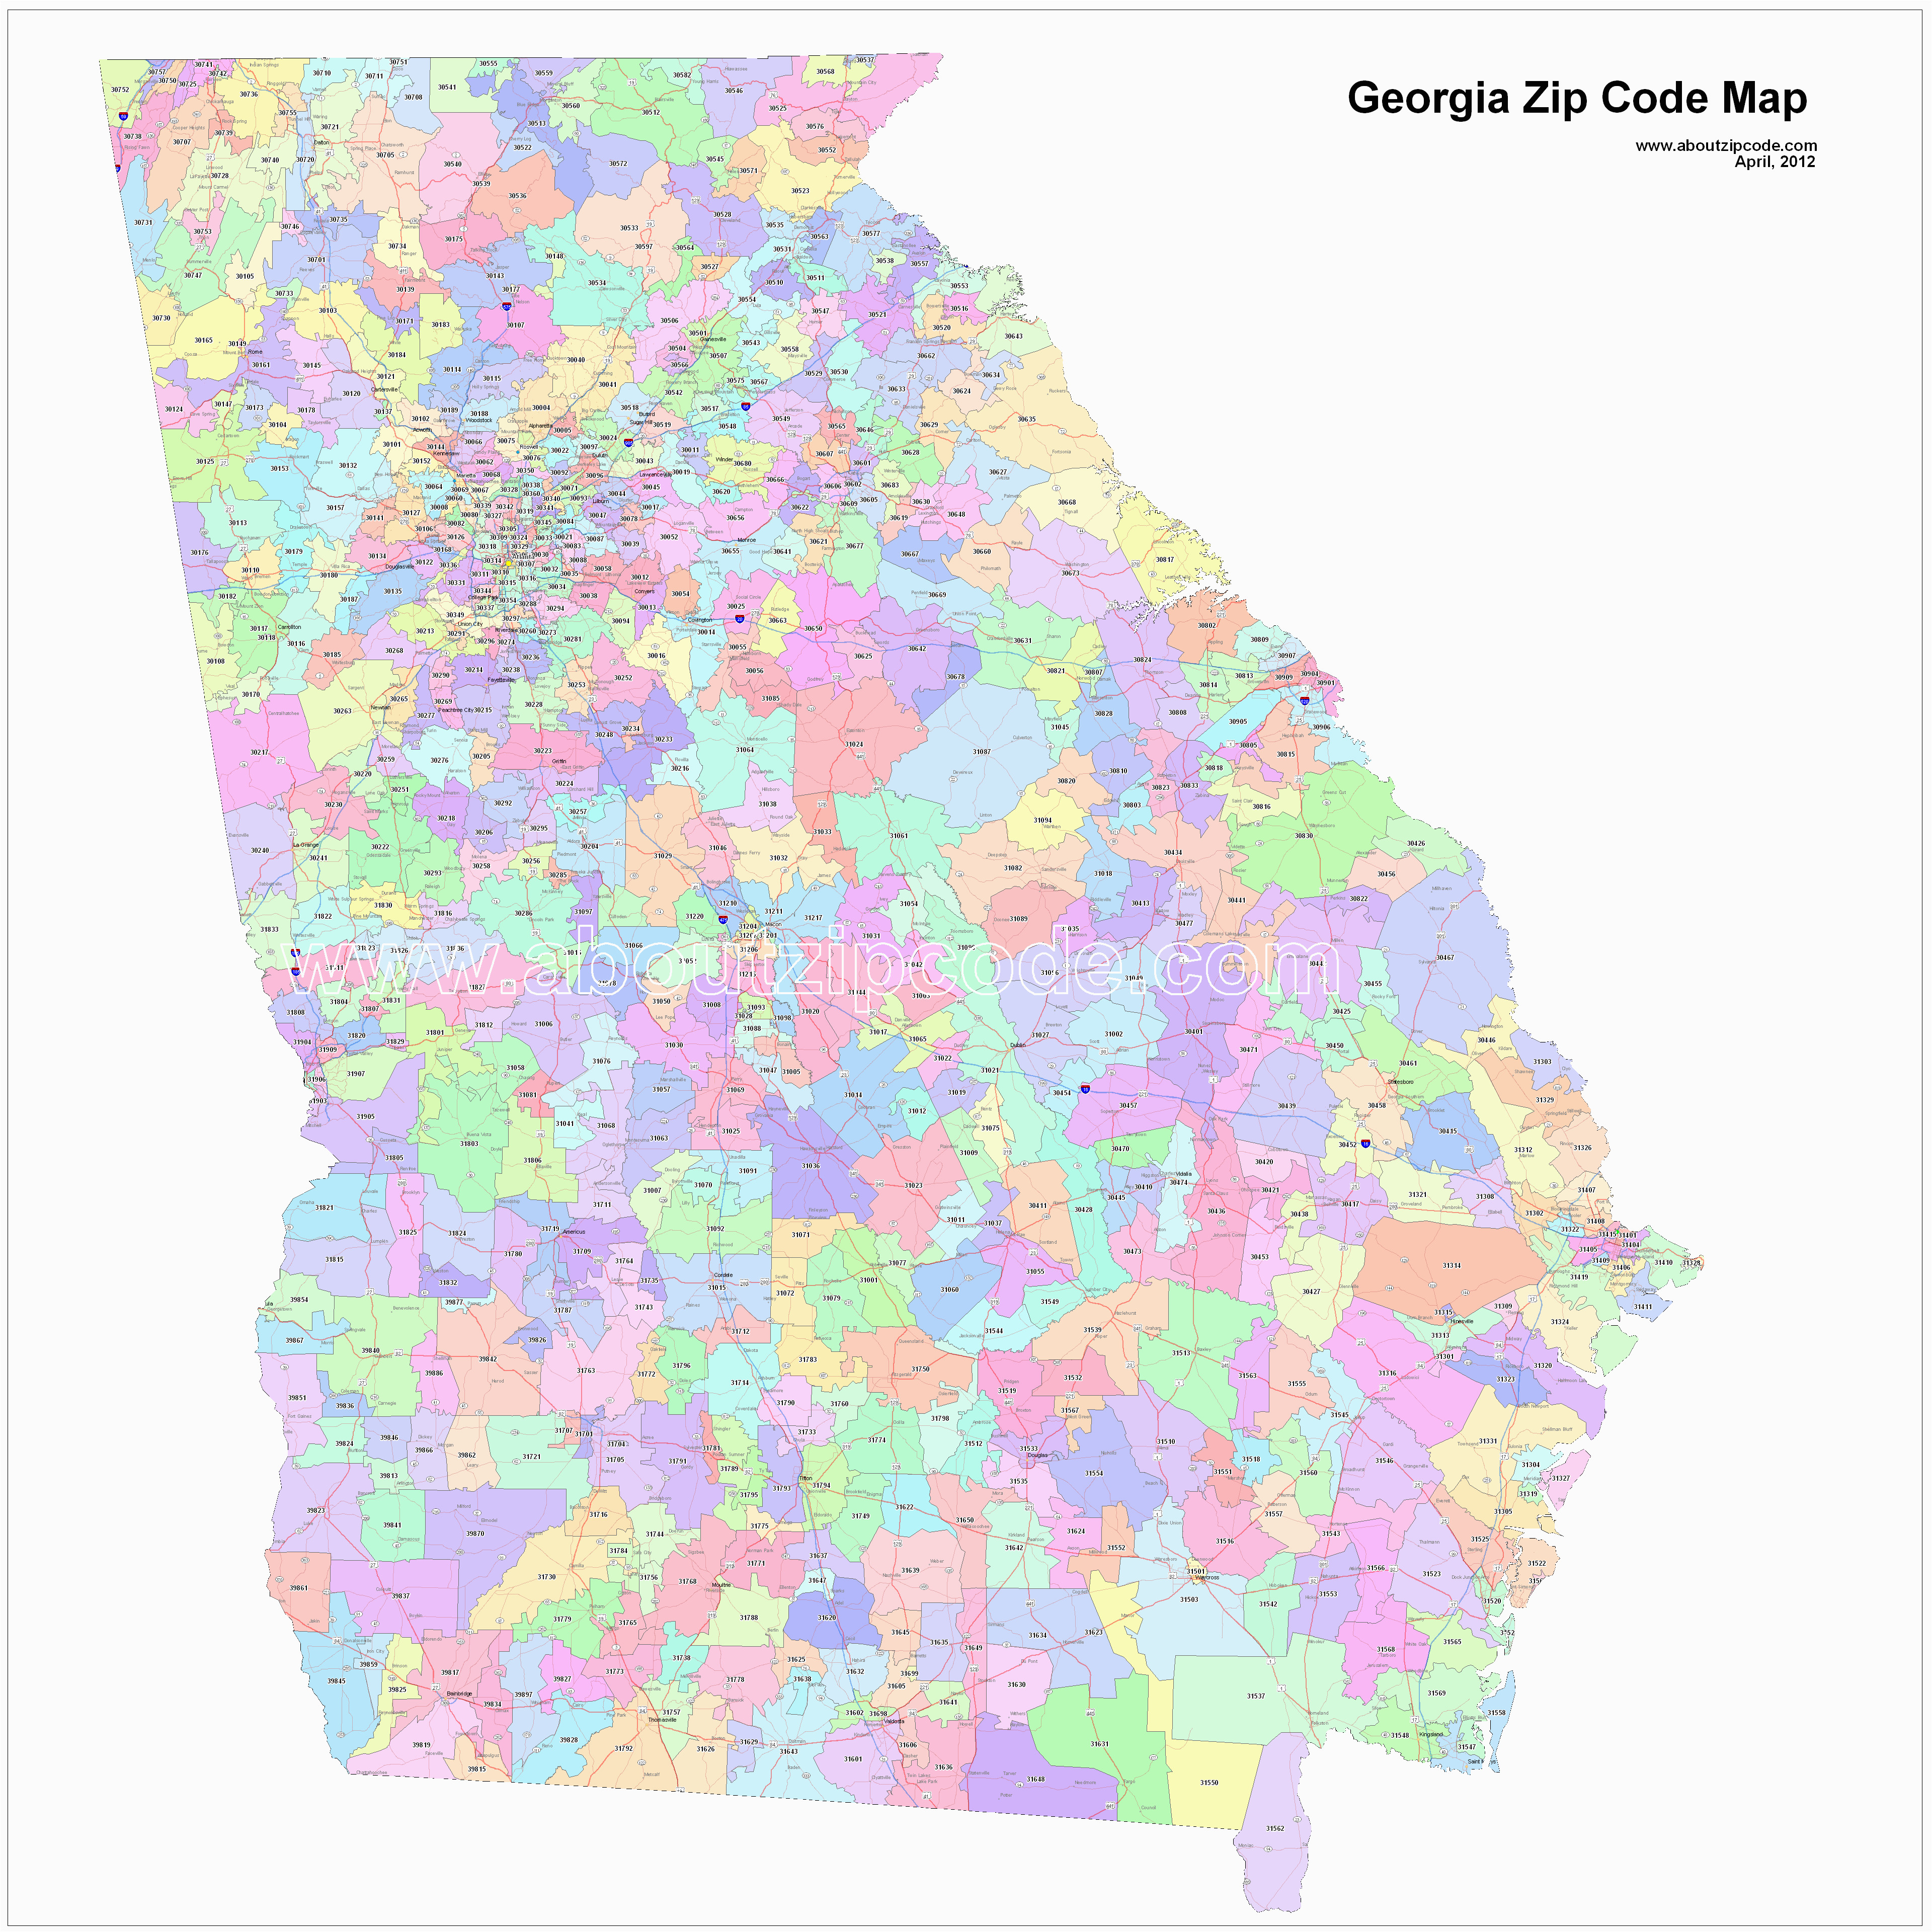 Georgia Map by Zip Code Georgia Zip Code Maps Free Georgia Zip Code Maps